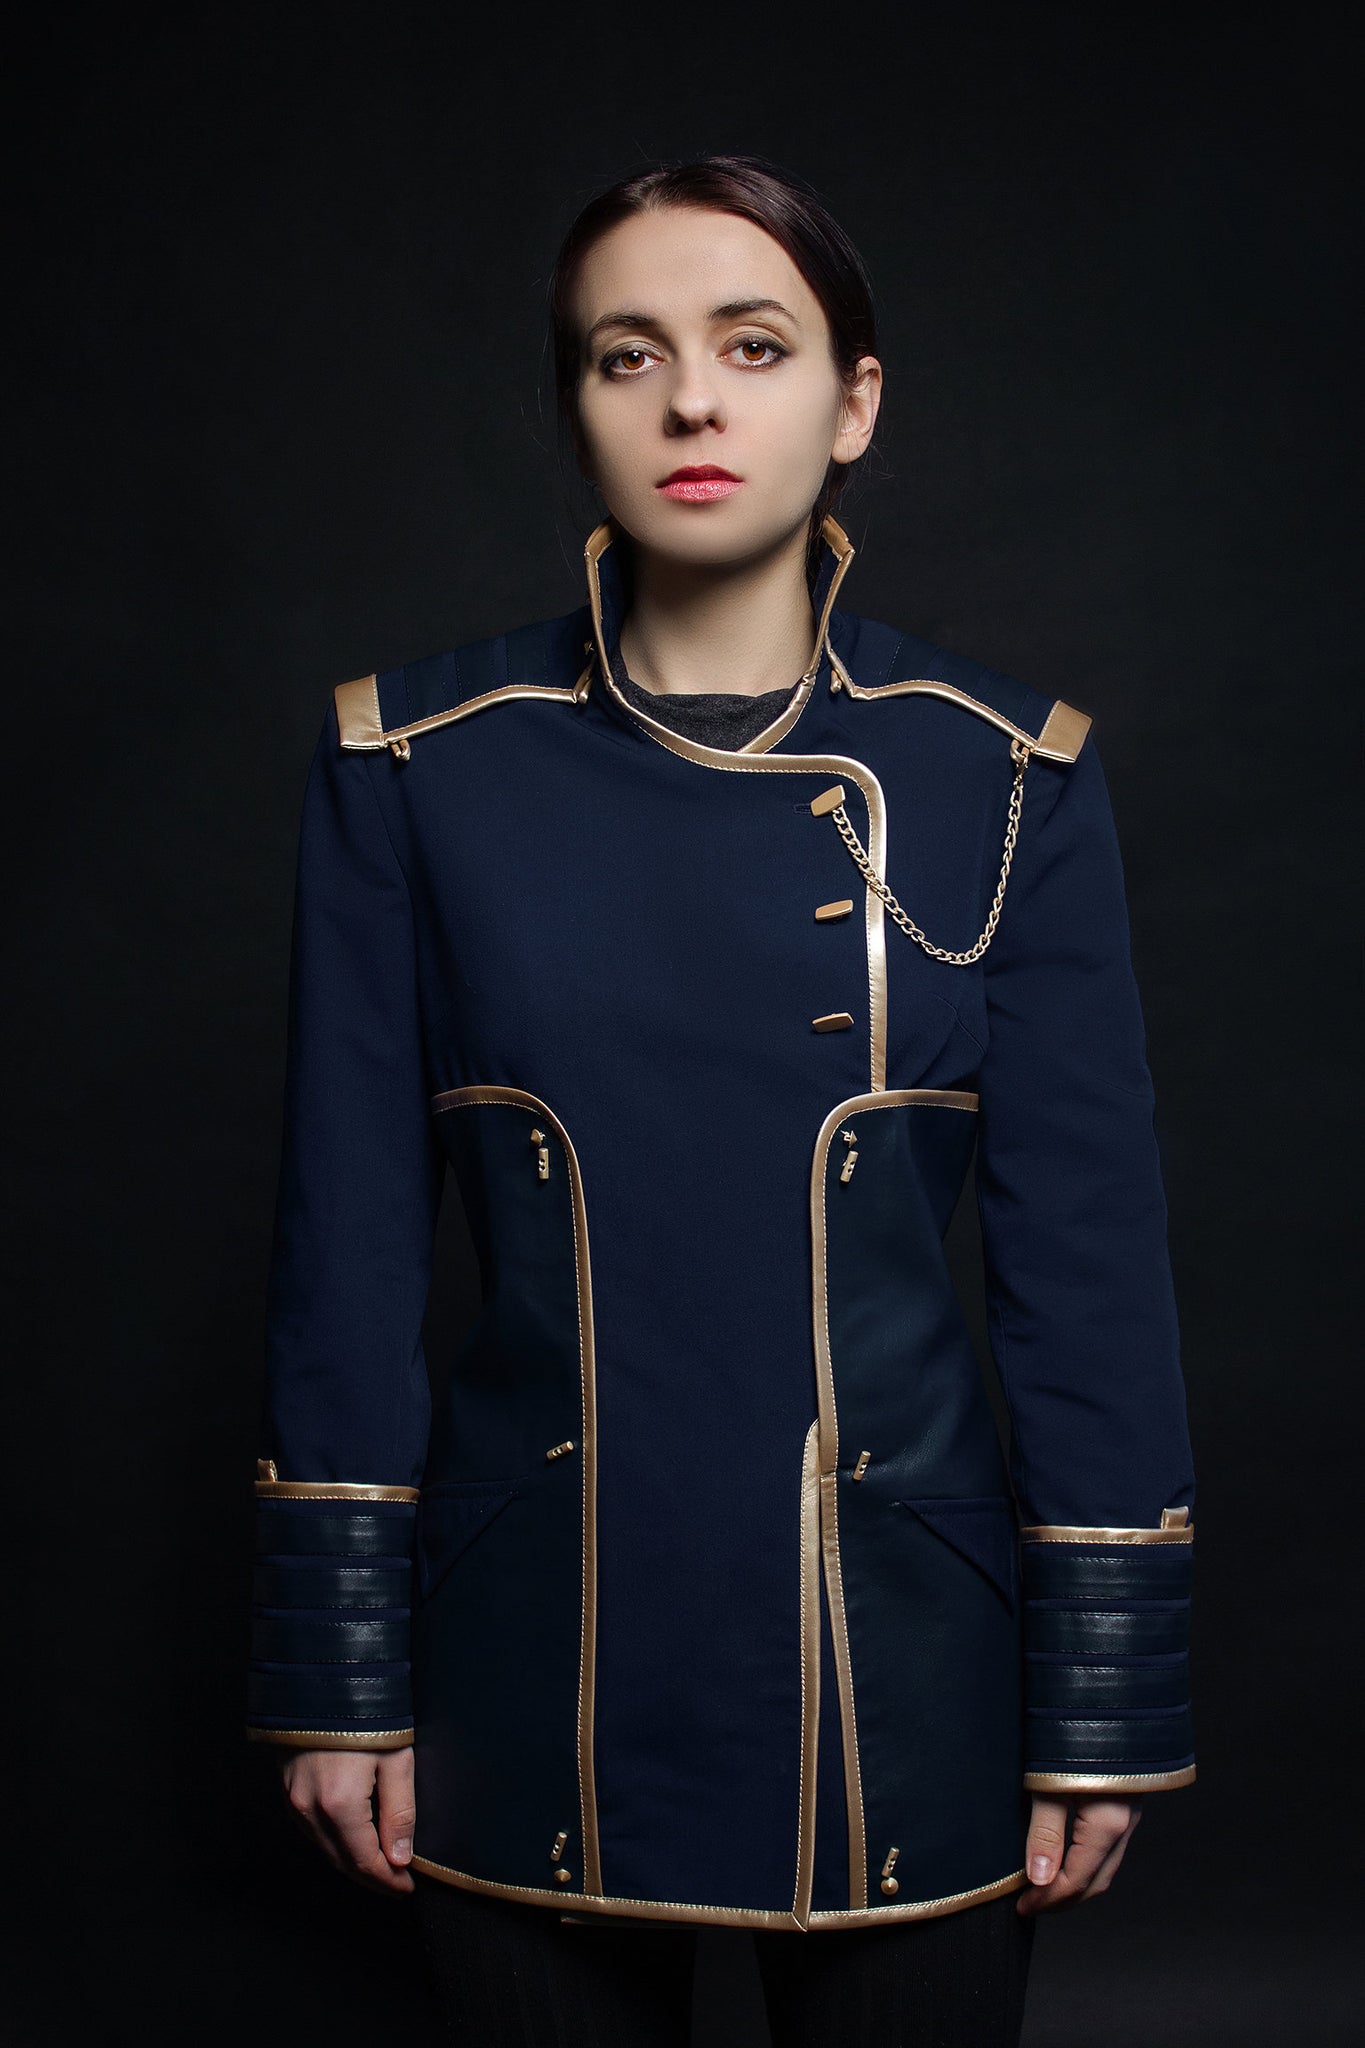 Female Shepard Alliance cosplay Video game cosplay female jacket cosplay for fans cosplayers Mass Effect Jacket women cosplay uniform